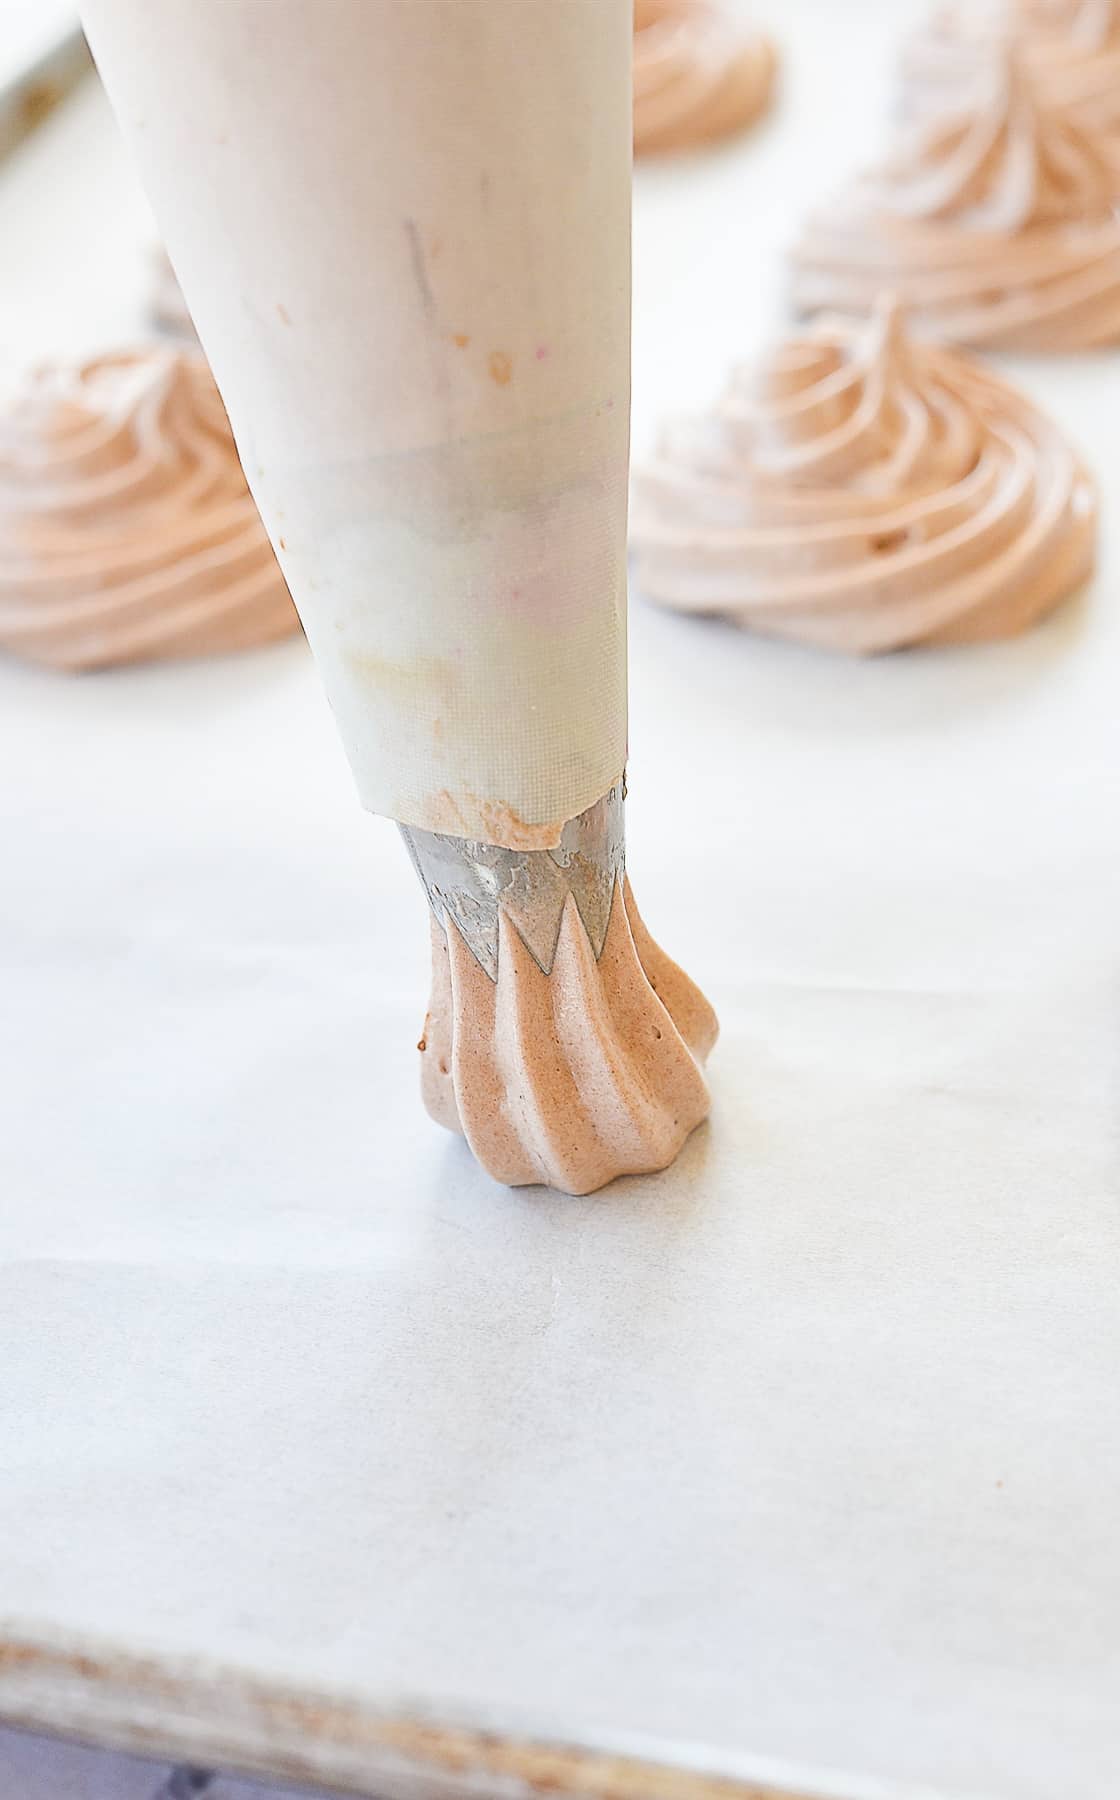 piping meringue on baking sheet